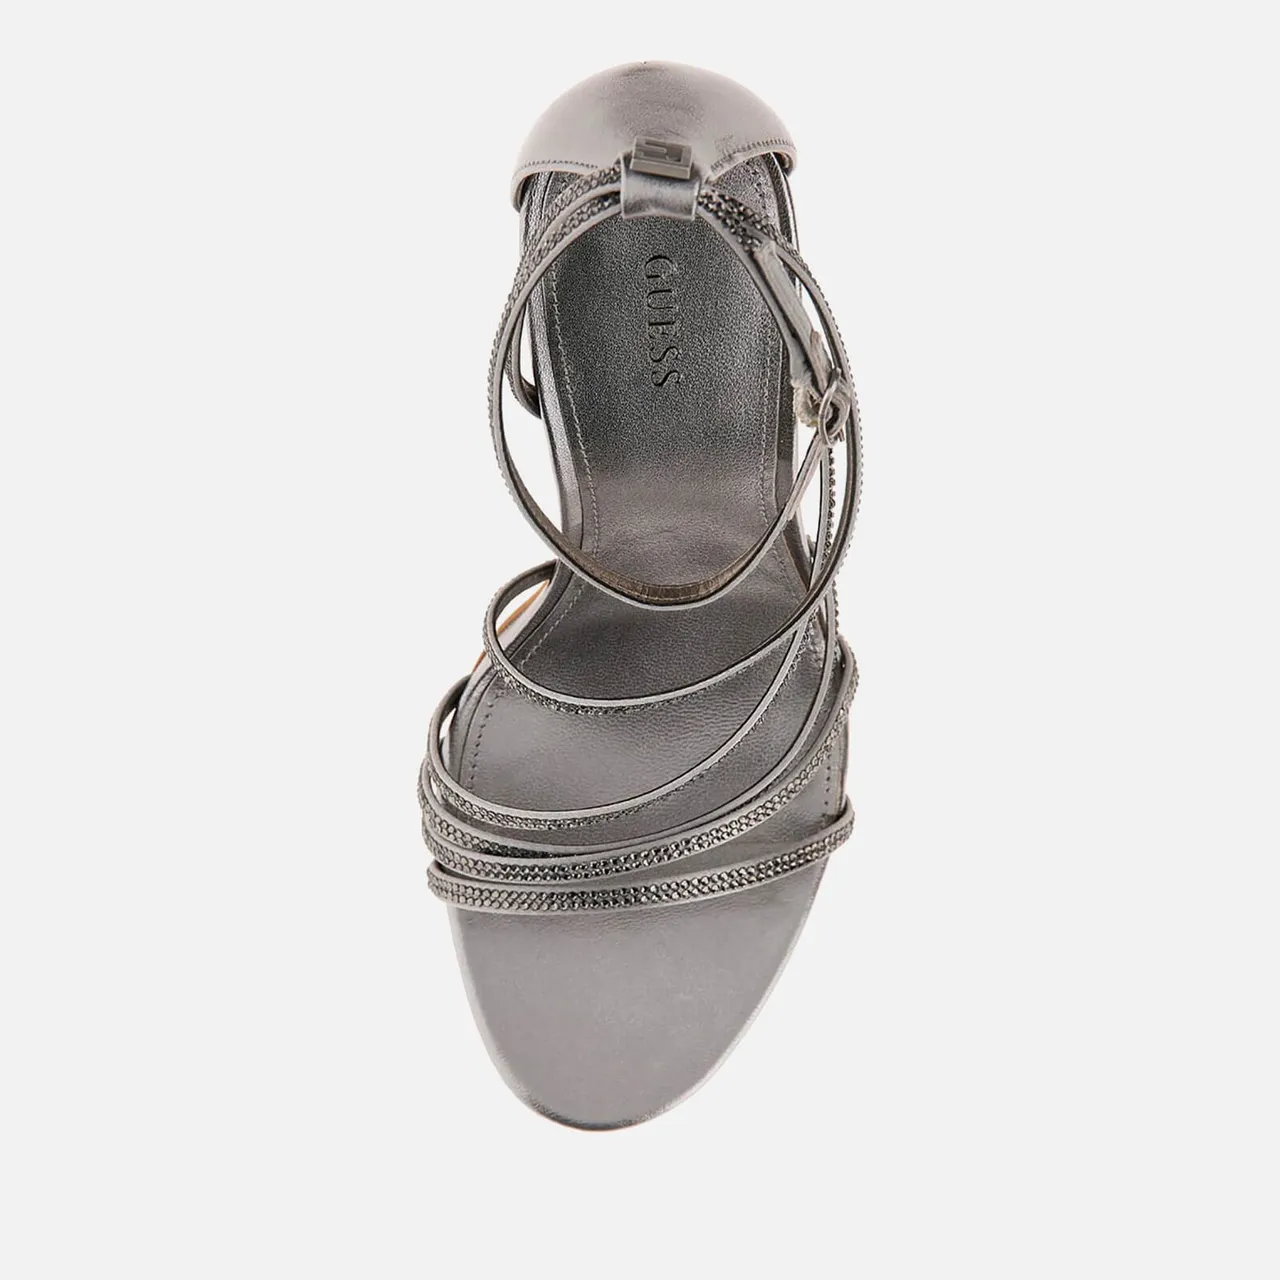 Guess Women's Axen 2 Embellished Satin Heeled Sandals - UK